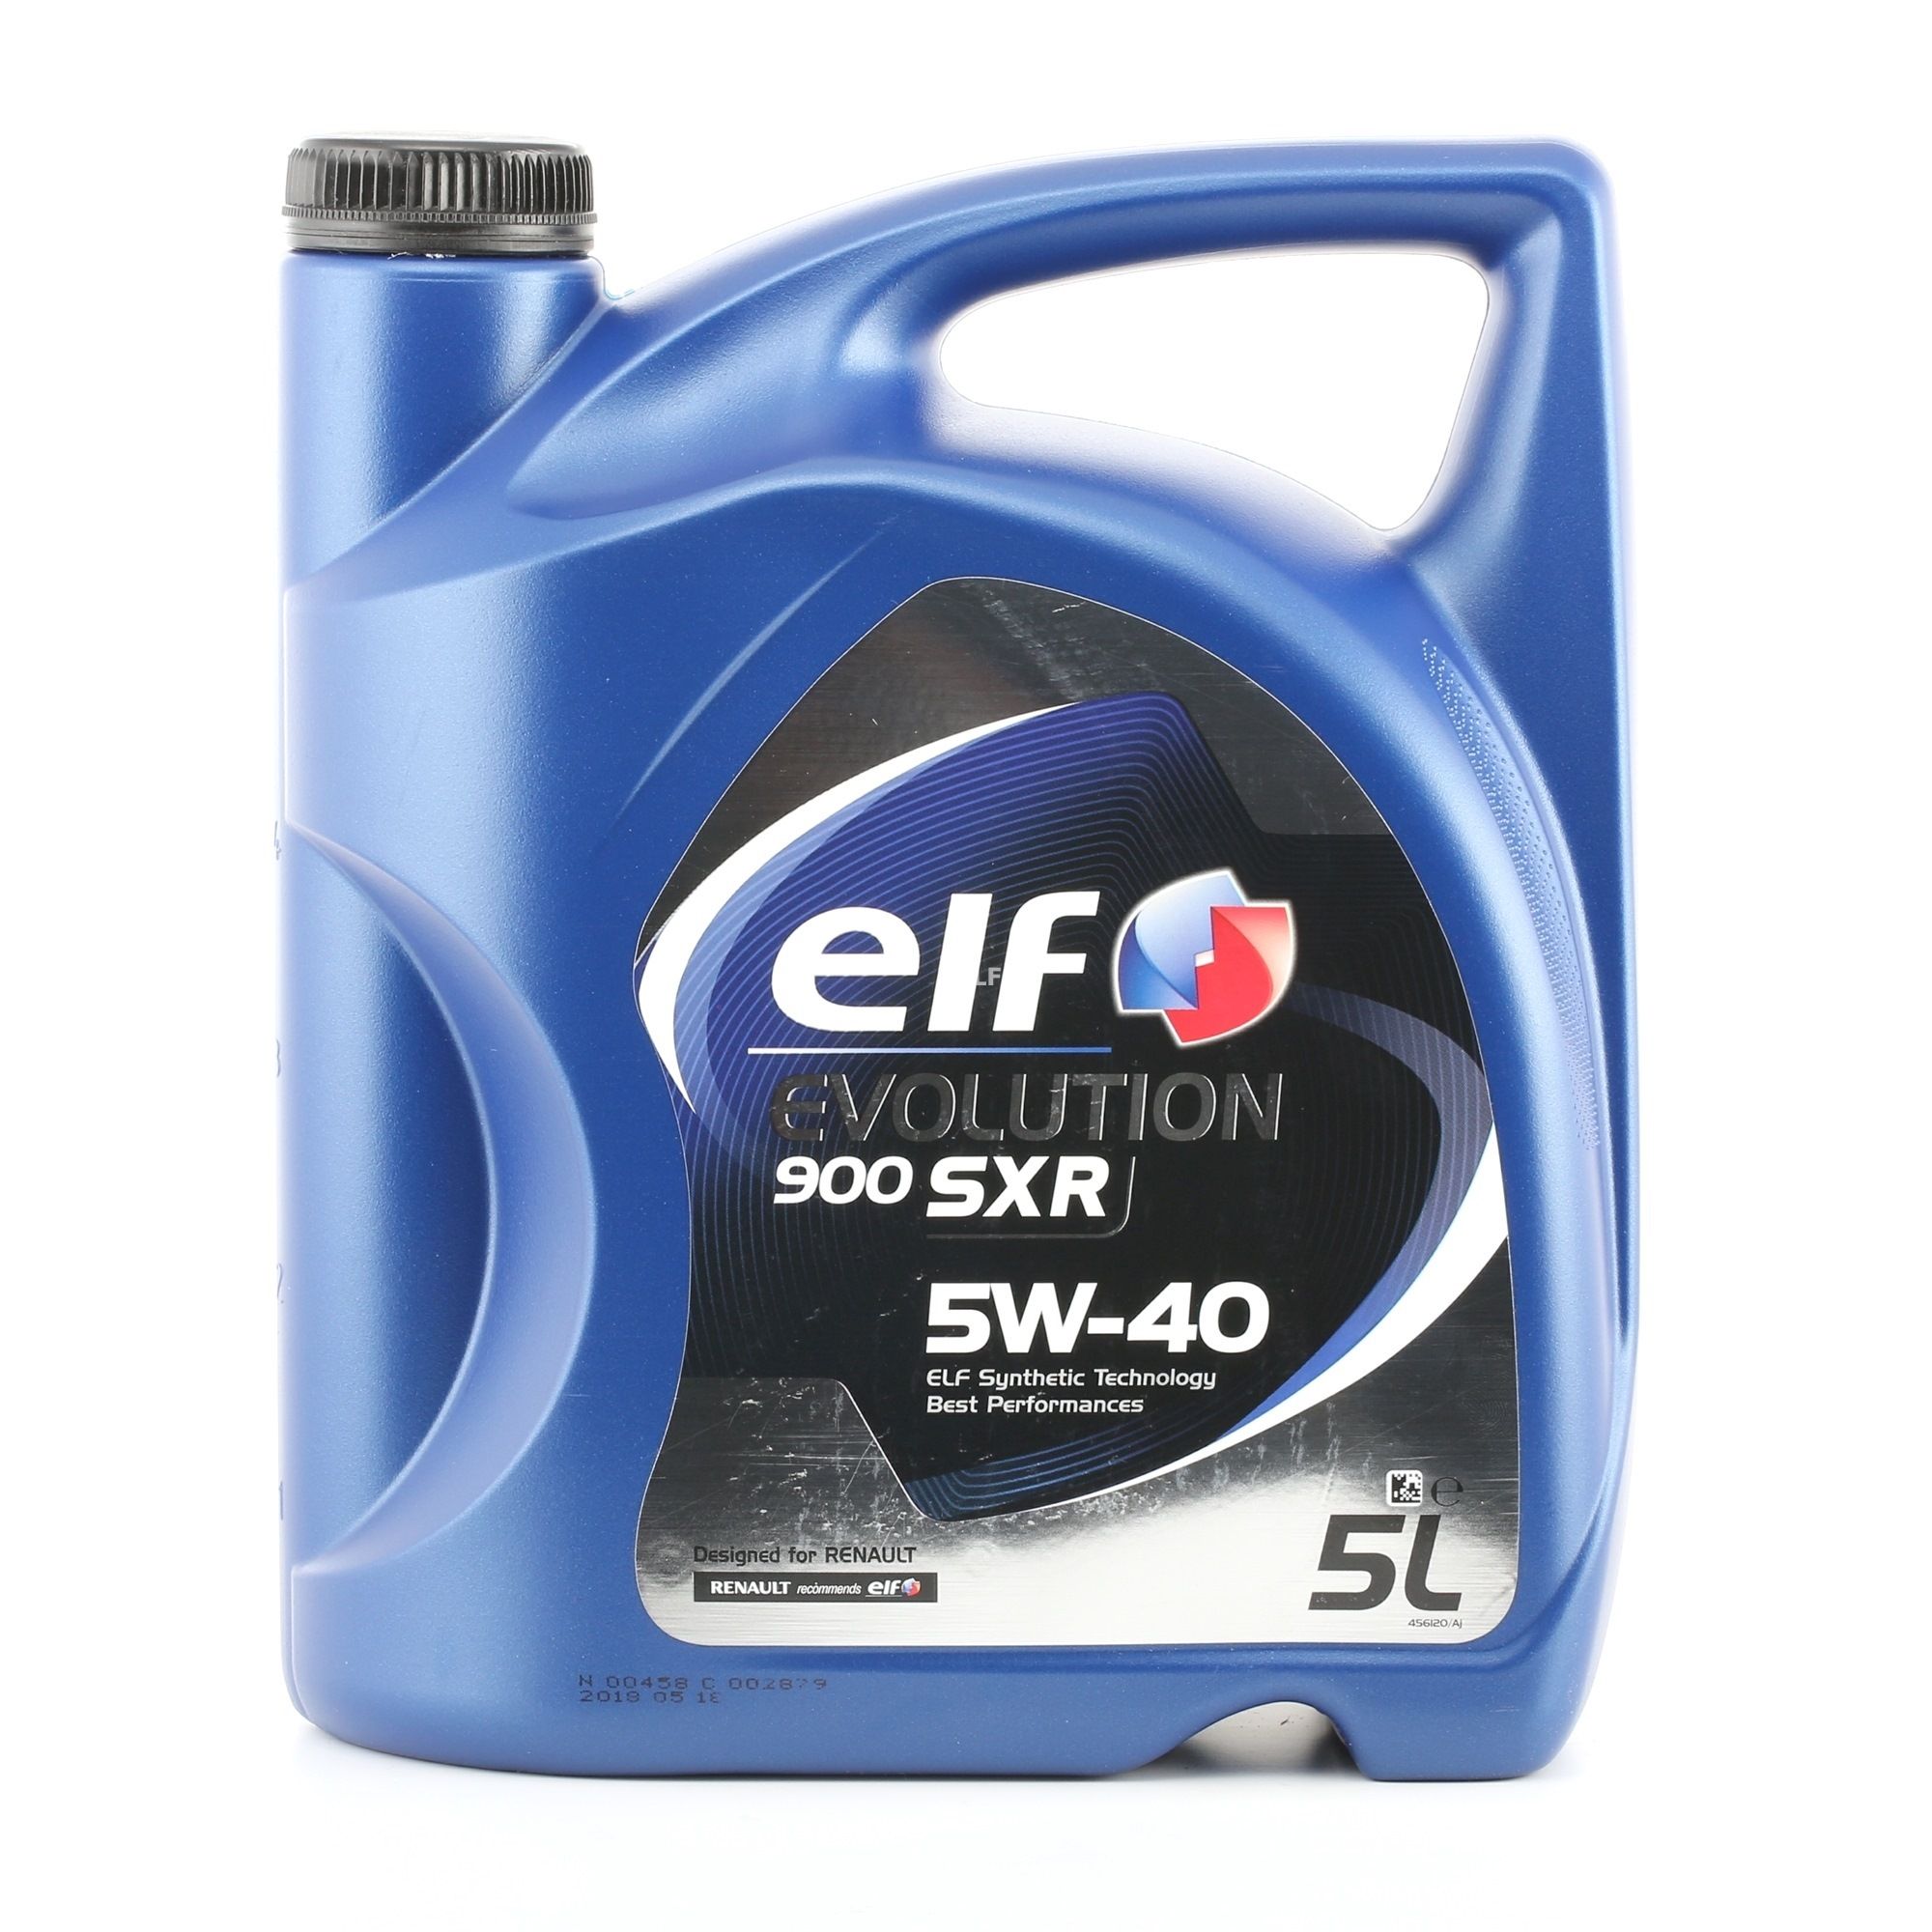 201510301041 ELF Evolution, 900 SXR 5W-40, 5l, Synthetiköl Motoröl 2198388 günstig